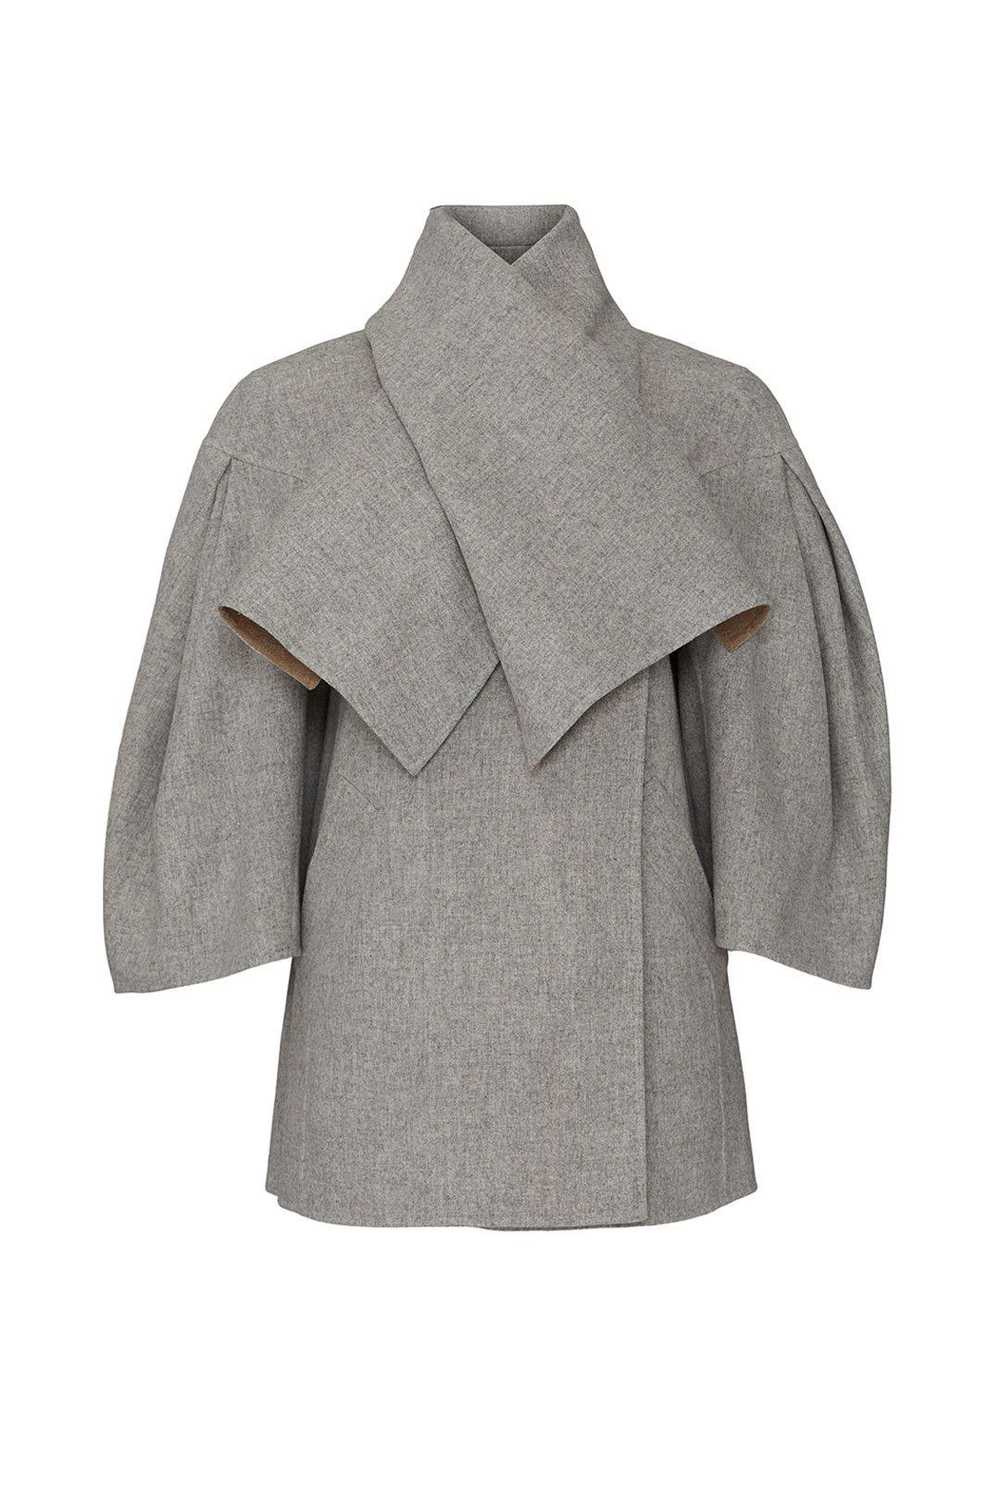 TEIJA Grey Shawl Collar Wool Coat - image 5